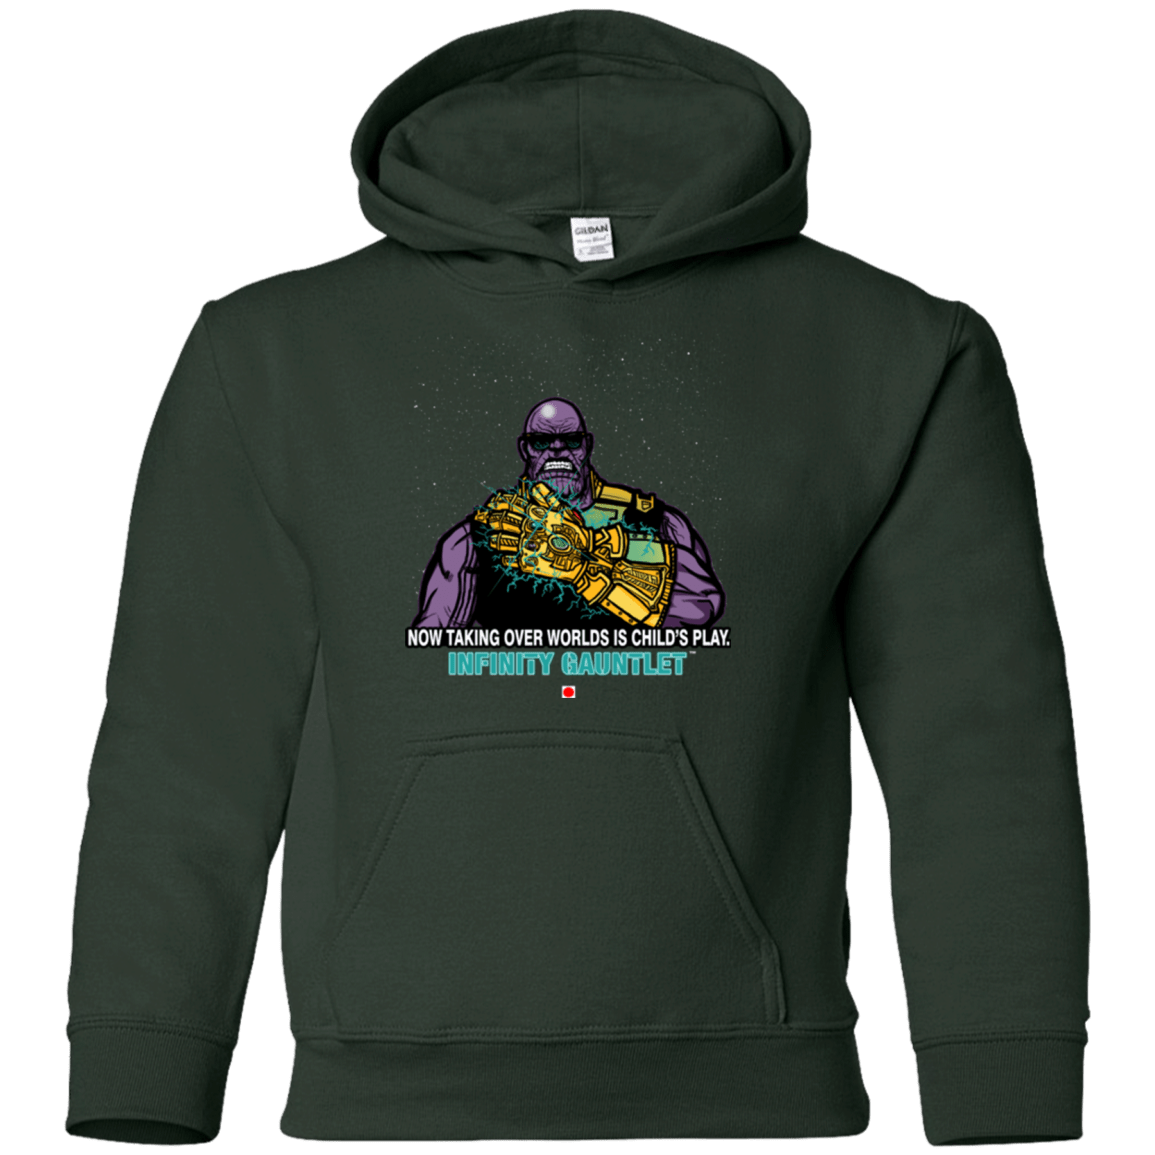 Sweatshirts Forest Green / YS Infinity Gear Youth Hoodie